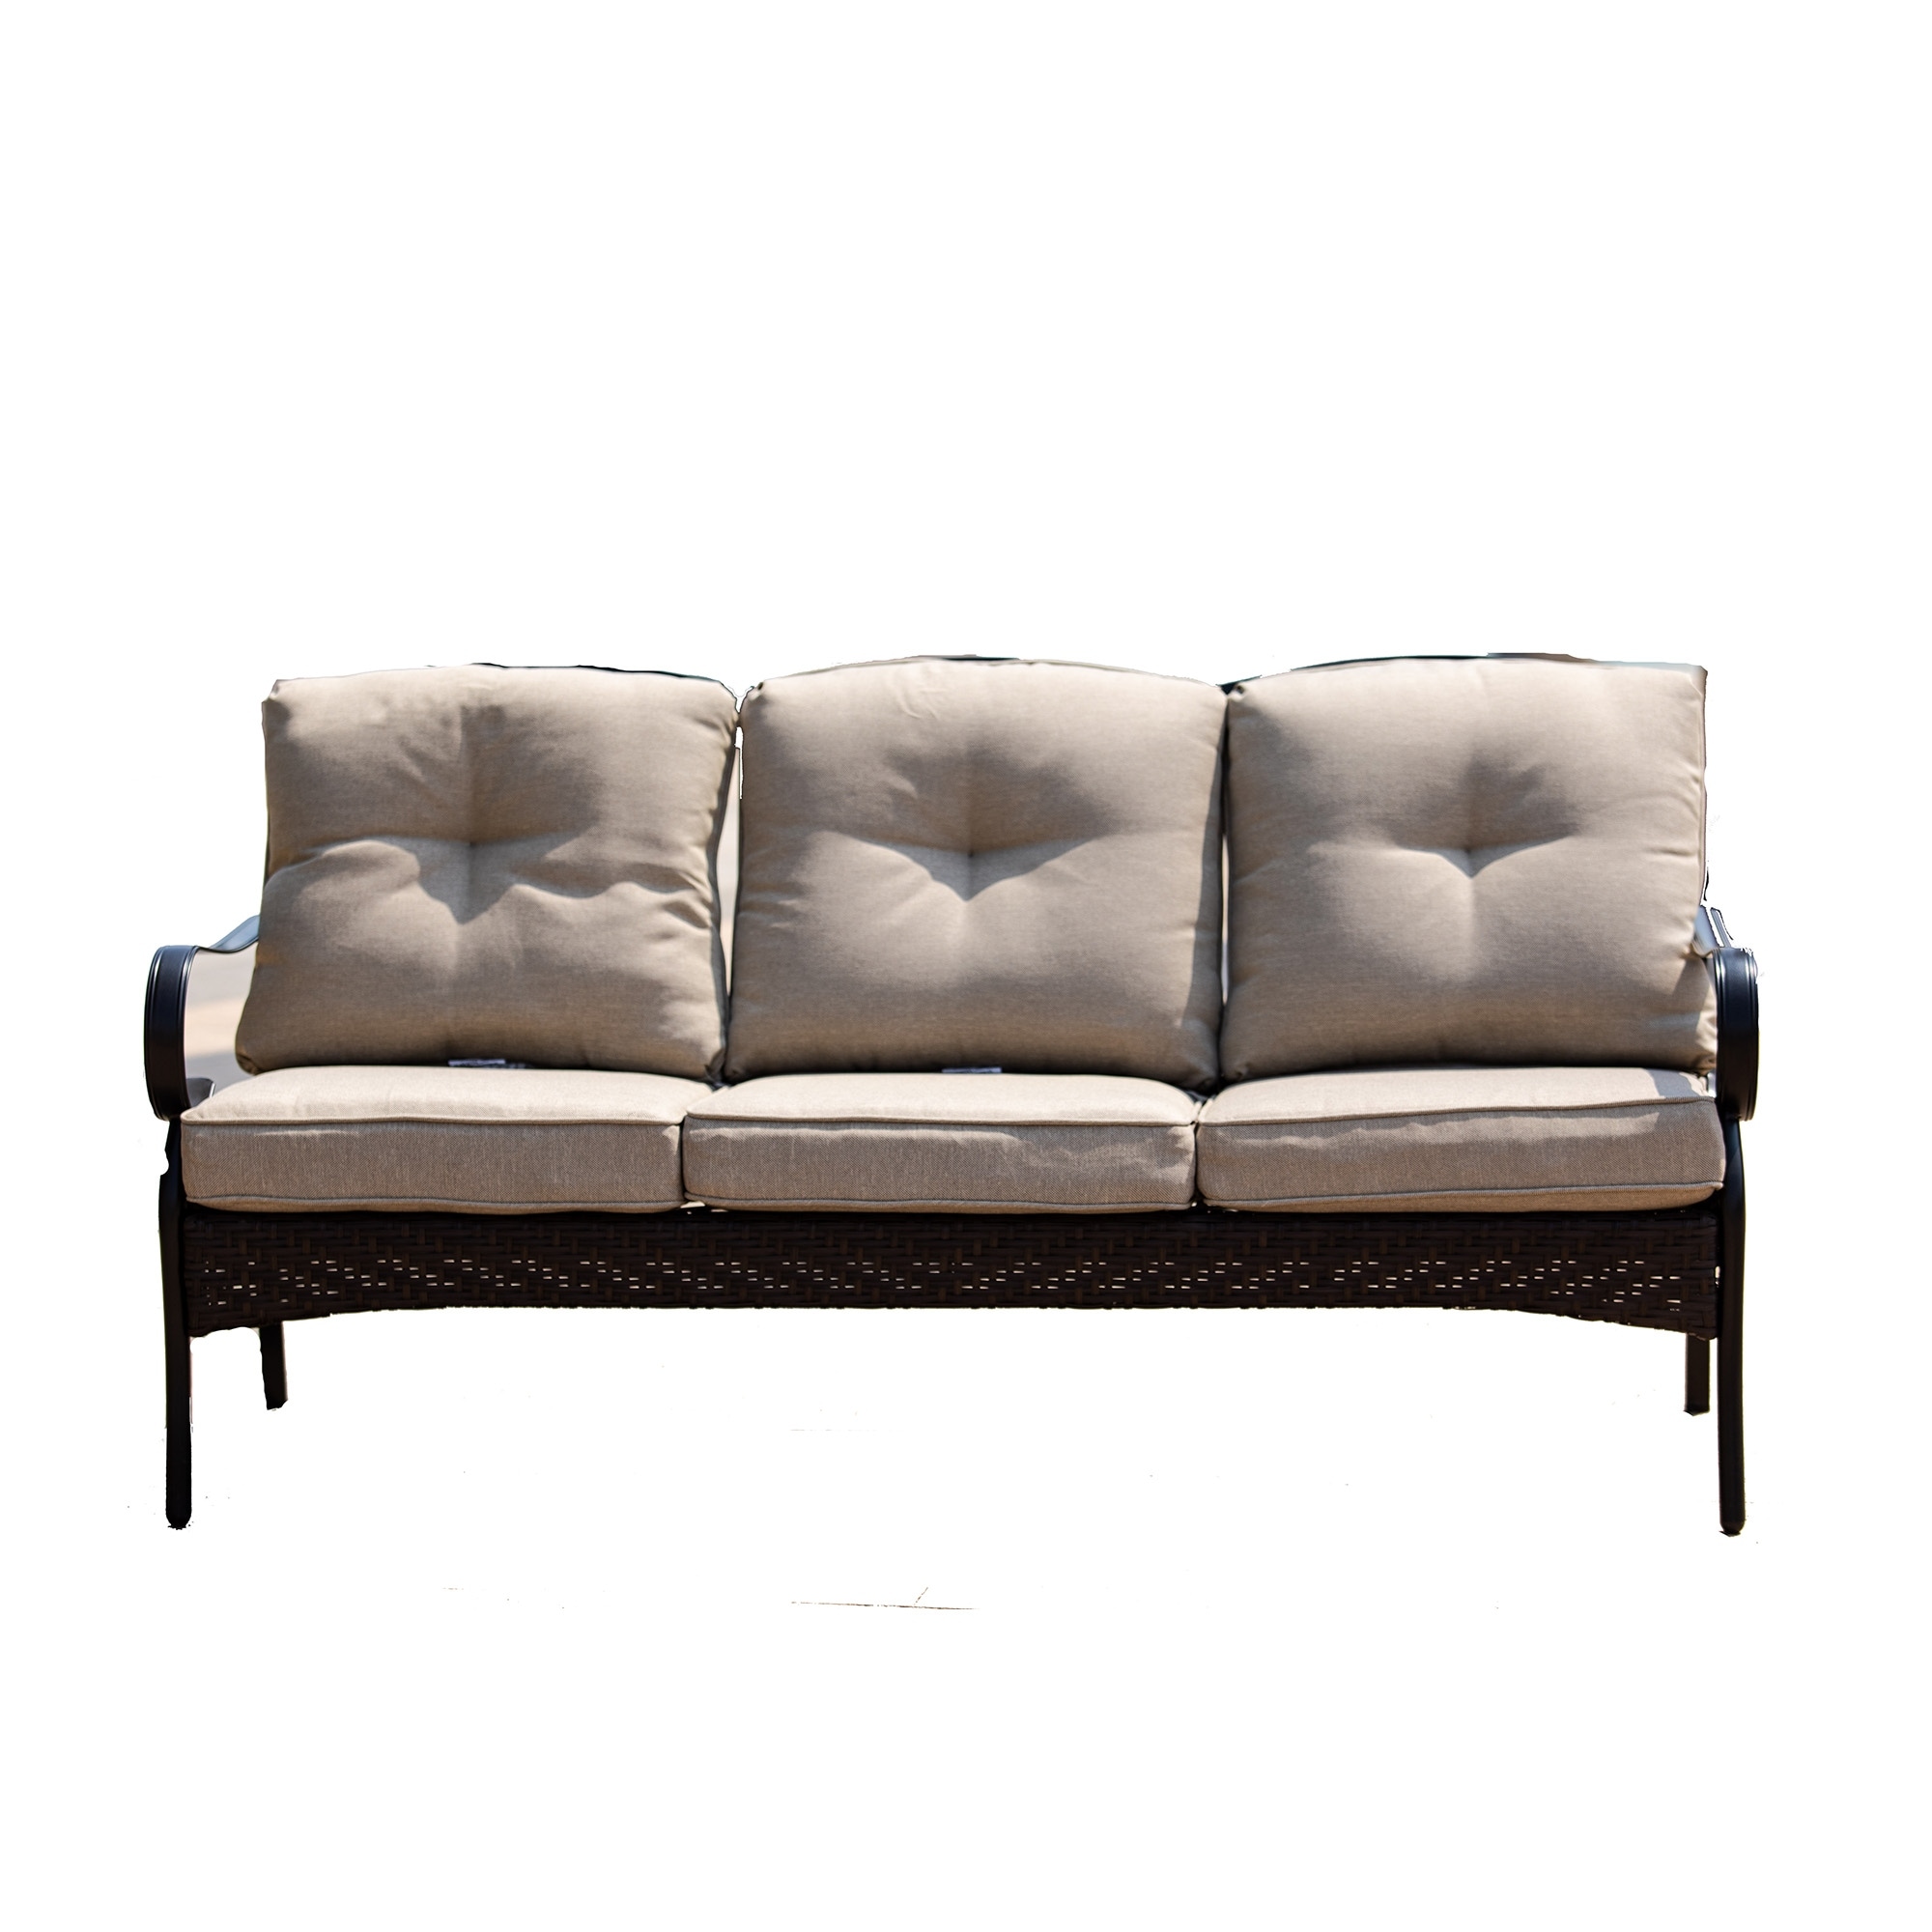 Moda Steel Patio Durable Sofa Sets For Customer Free Combination